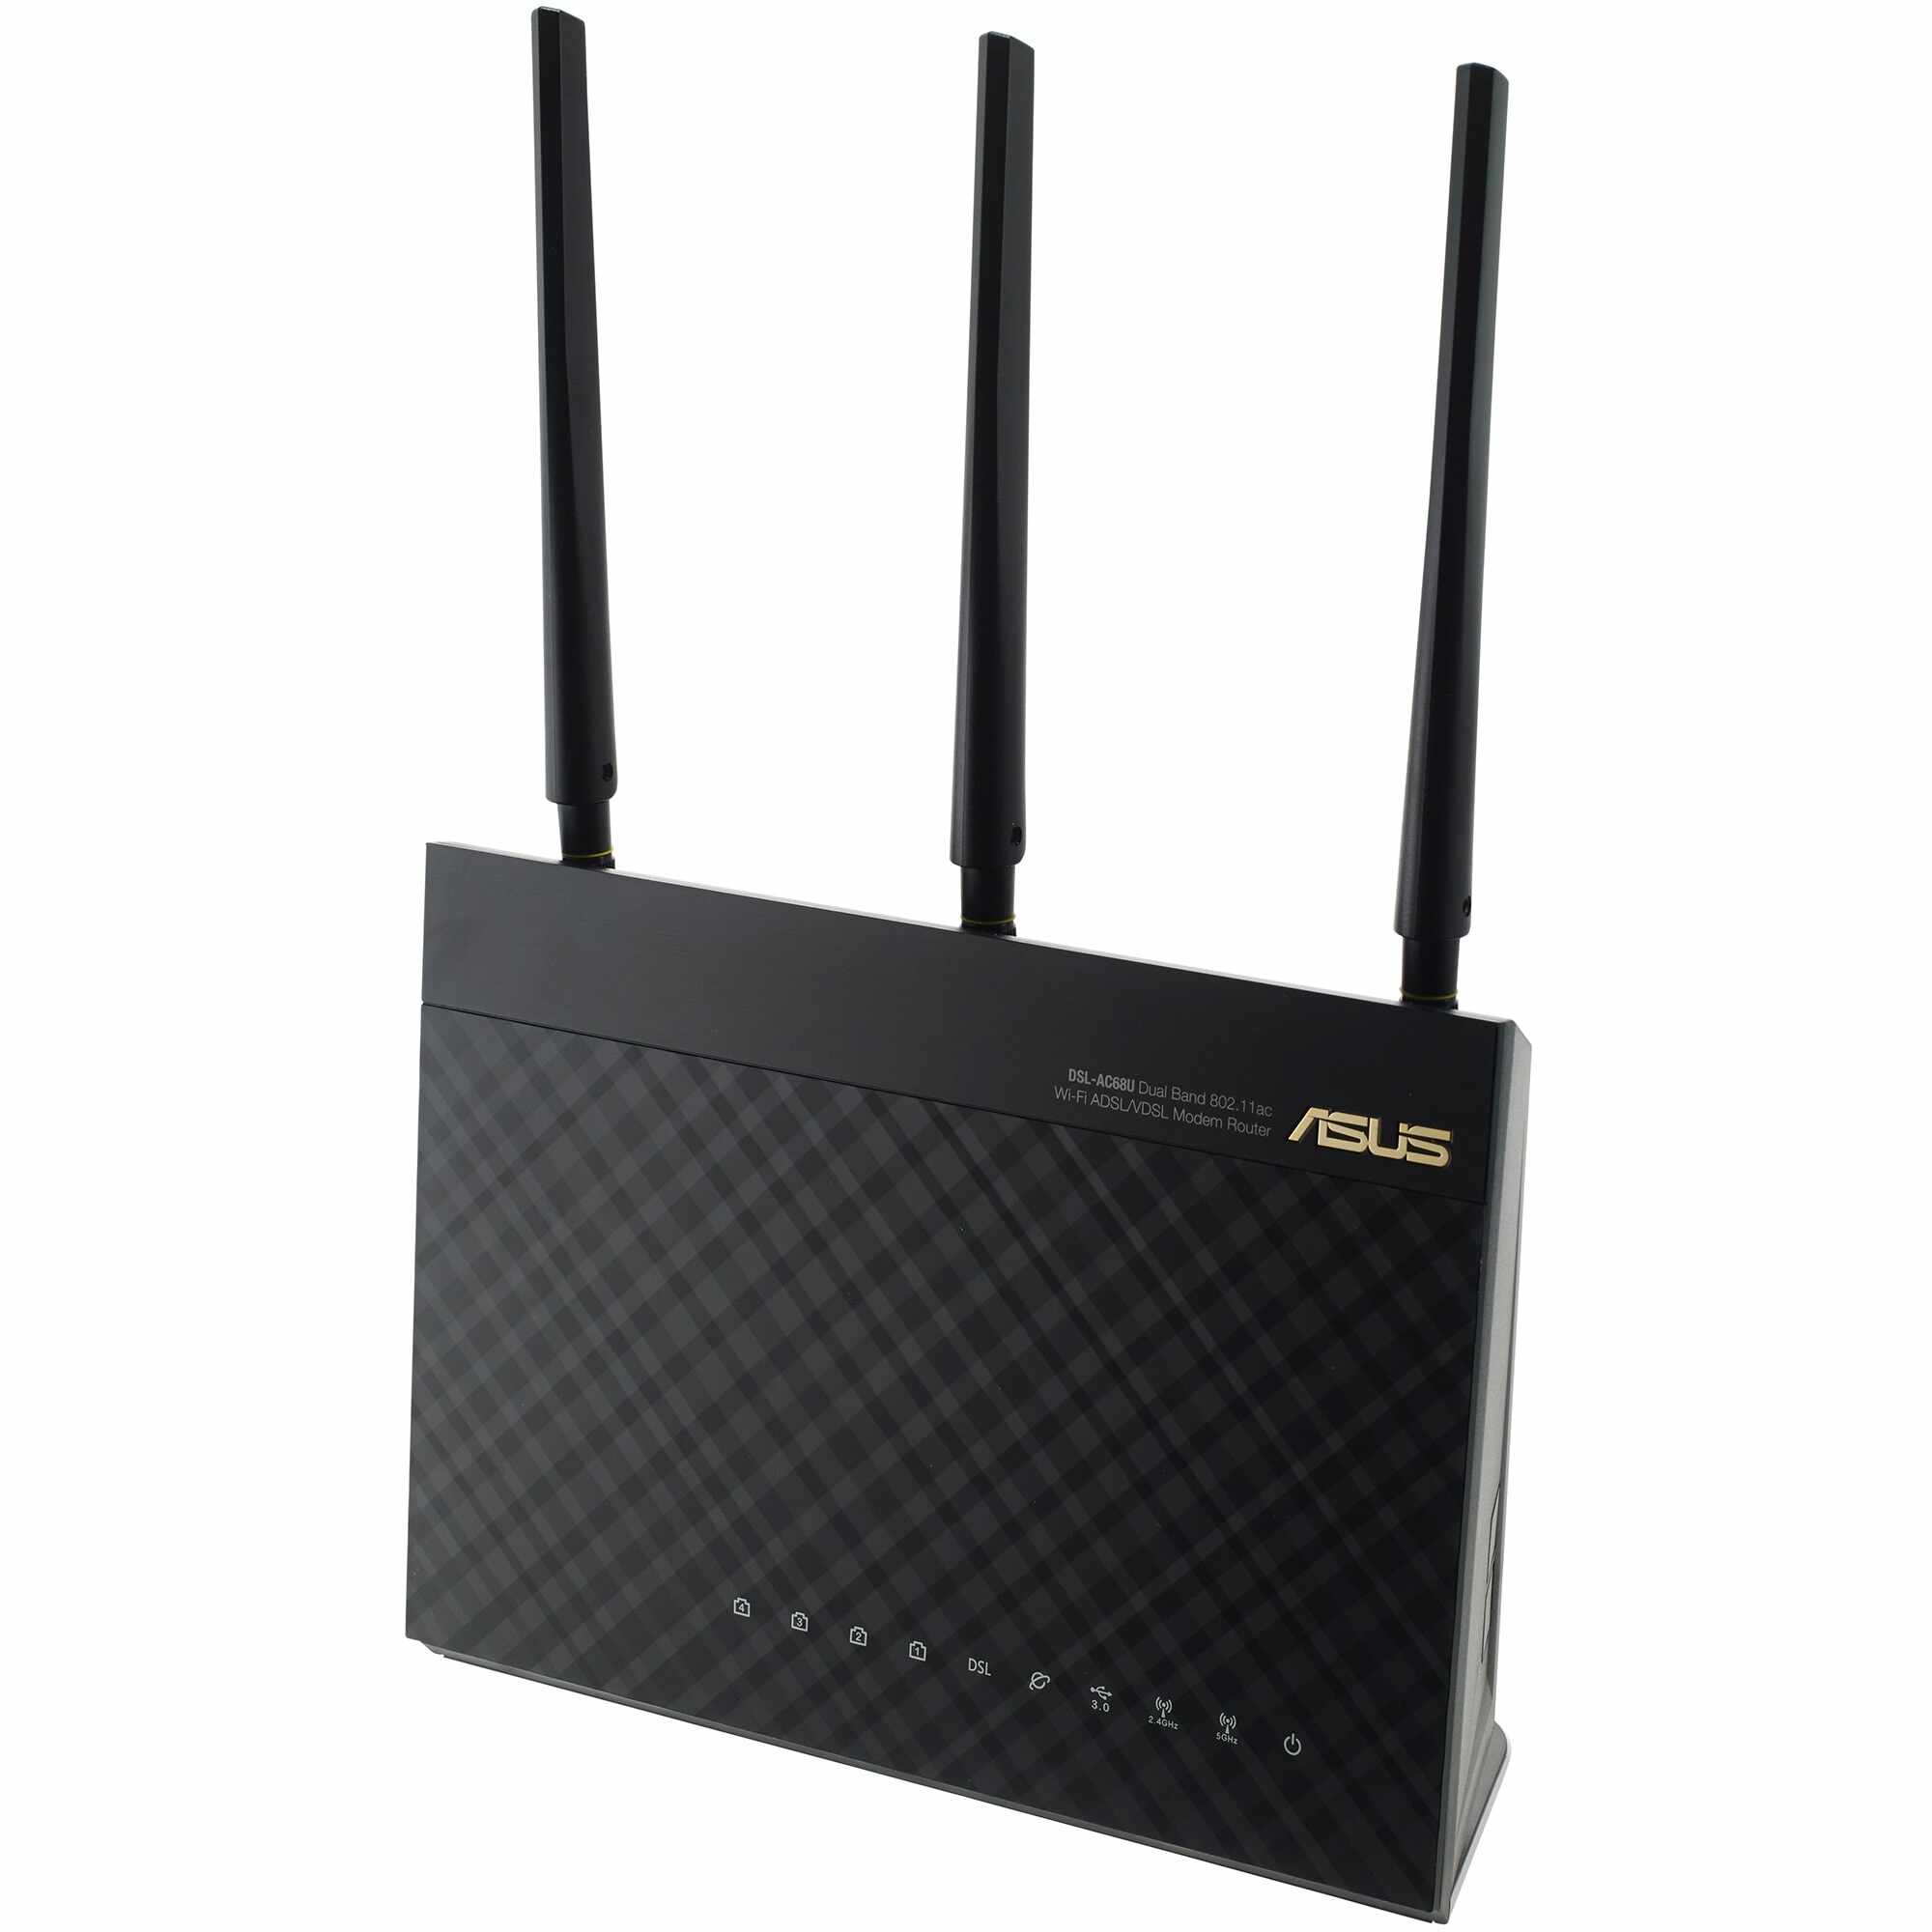 Router wireless ASUS DSL-AC68U, AC1900, 600 + 1300 Mbps, 4 x RJ45 10/100/1000 Mbps, USB 3.0, Black